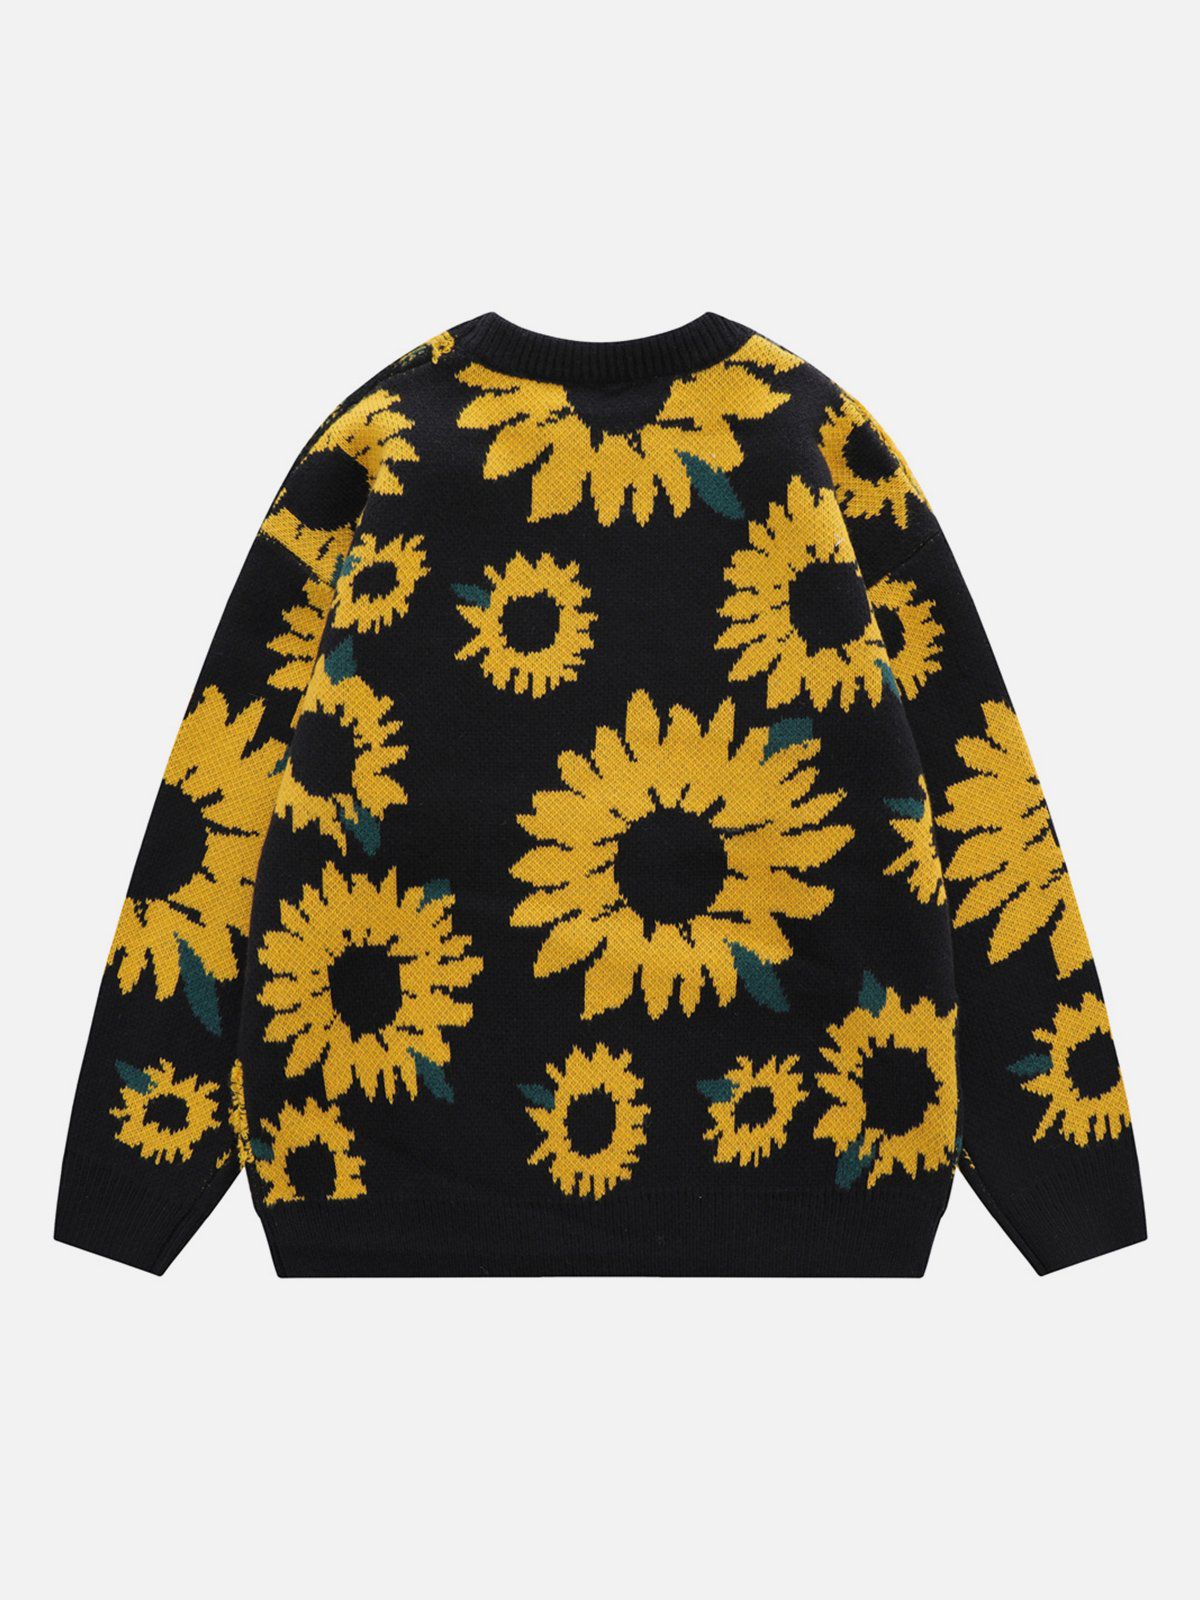 Aelfric Eden Sunflower Flocking Print Sweater @lamia.e.lhari